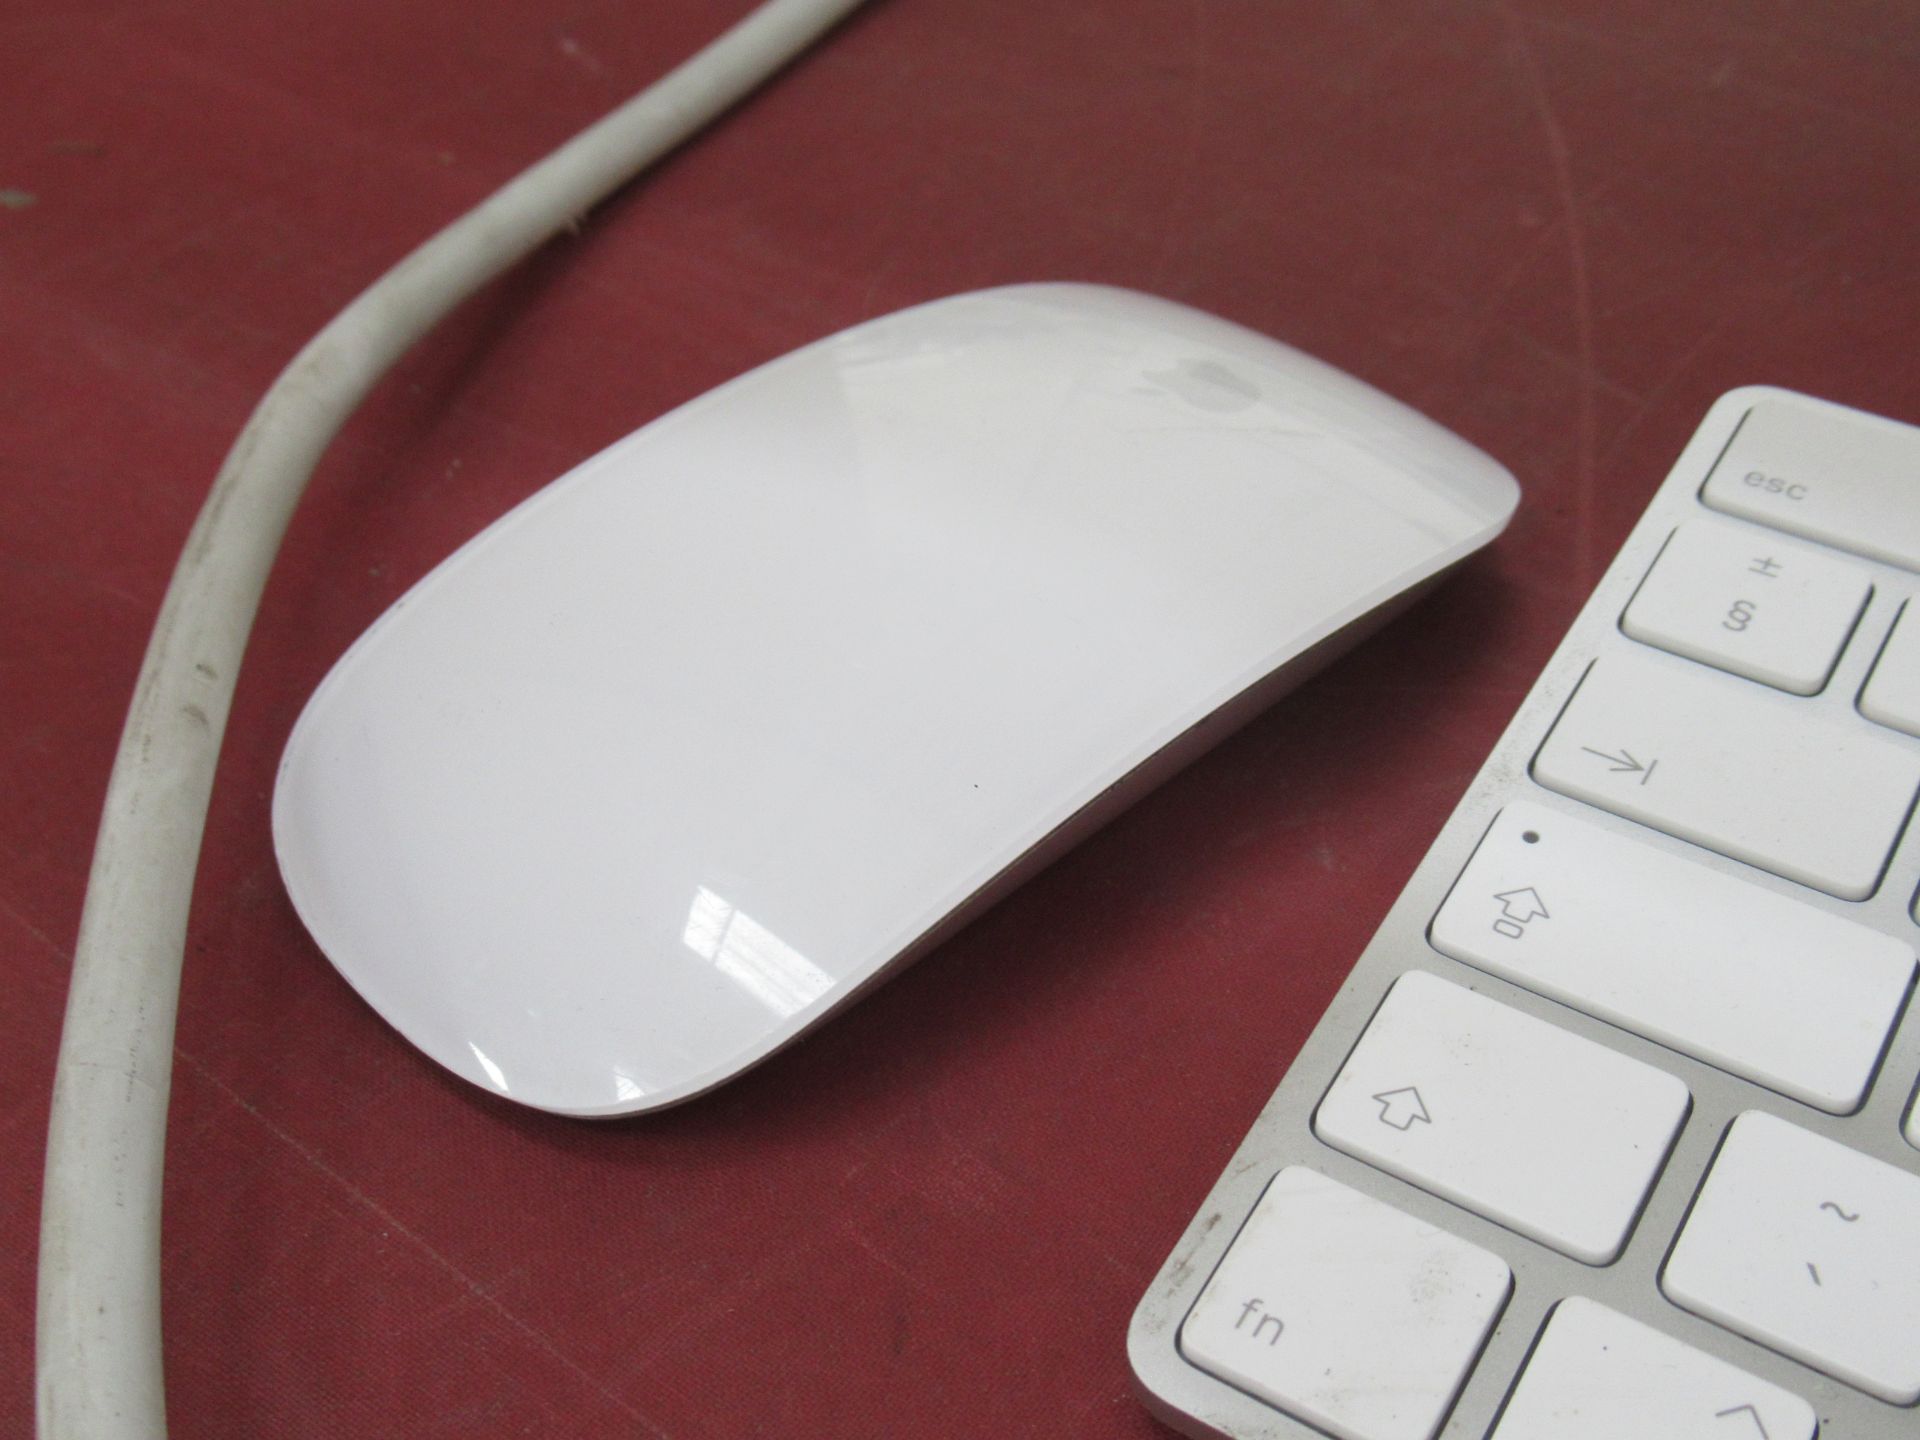 Apple iMac with i5 processor and 24GB RAM. - Image 7 of 9